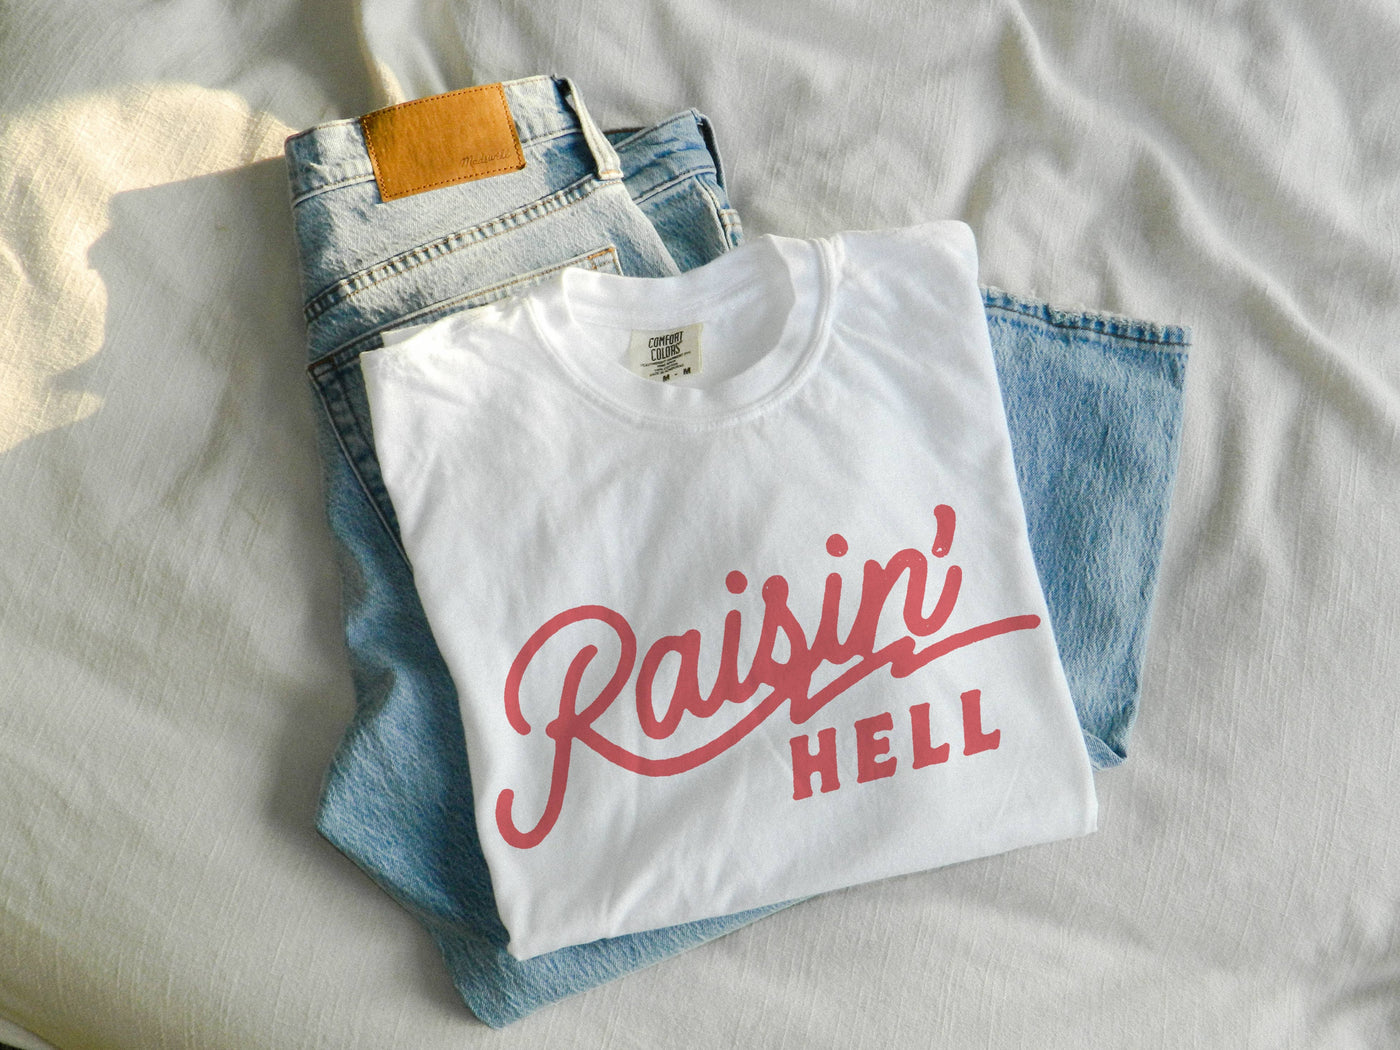 Raisin’ Hell Graphic Tee